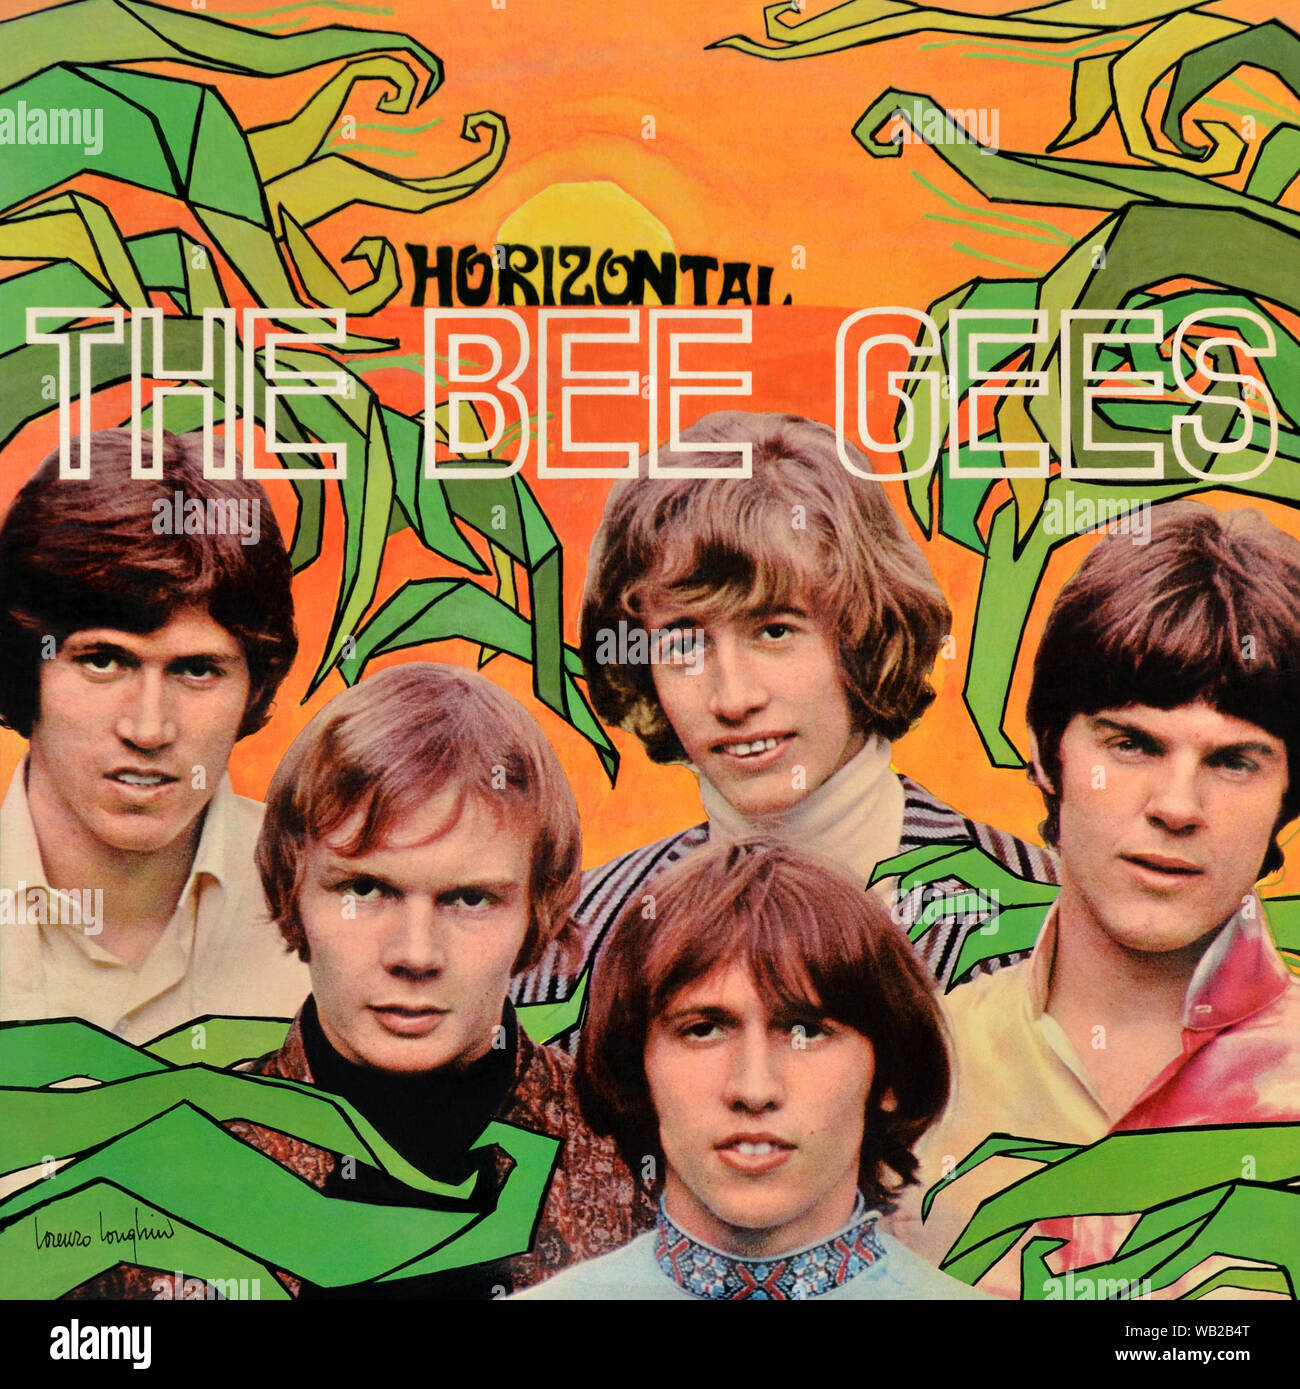 The Bee Gees - original vinyl album cover - Horizontal - 1968 Stock Photo